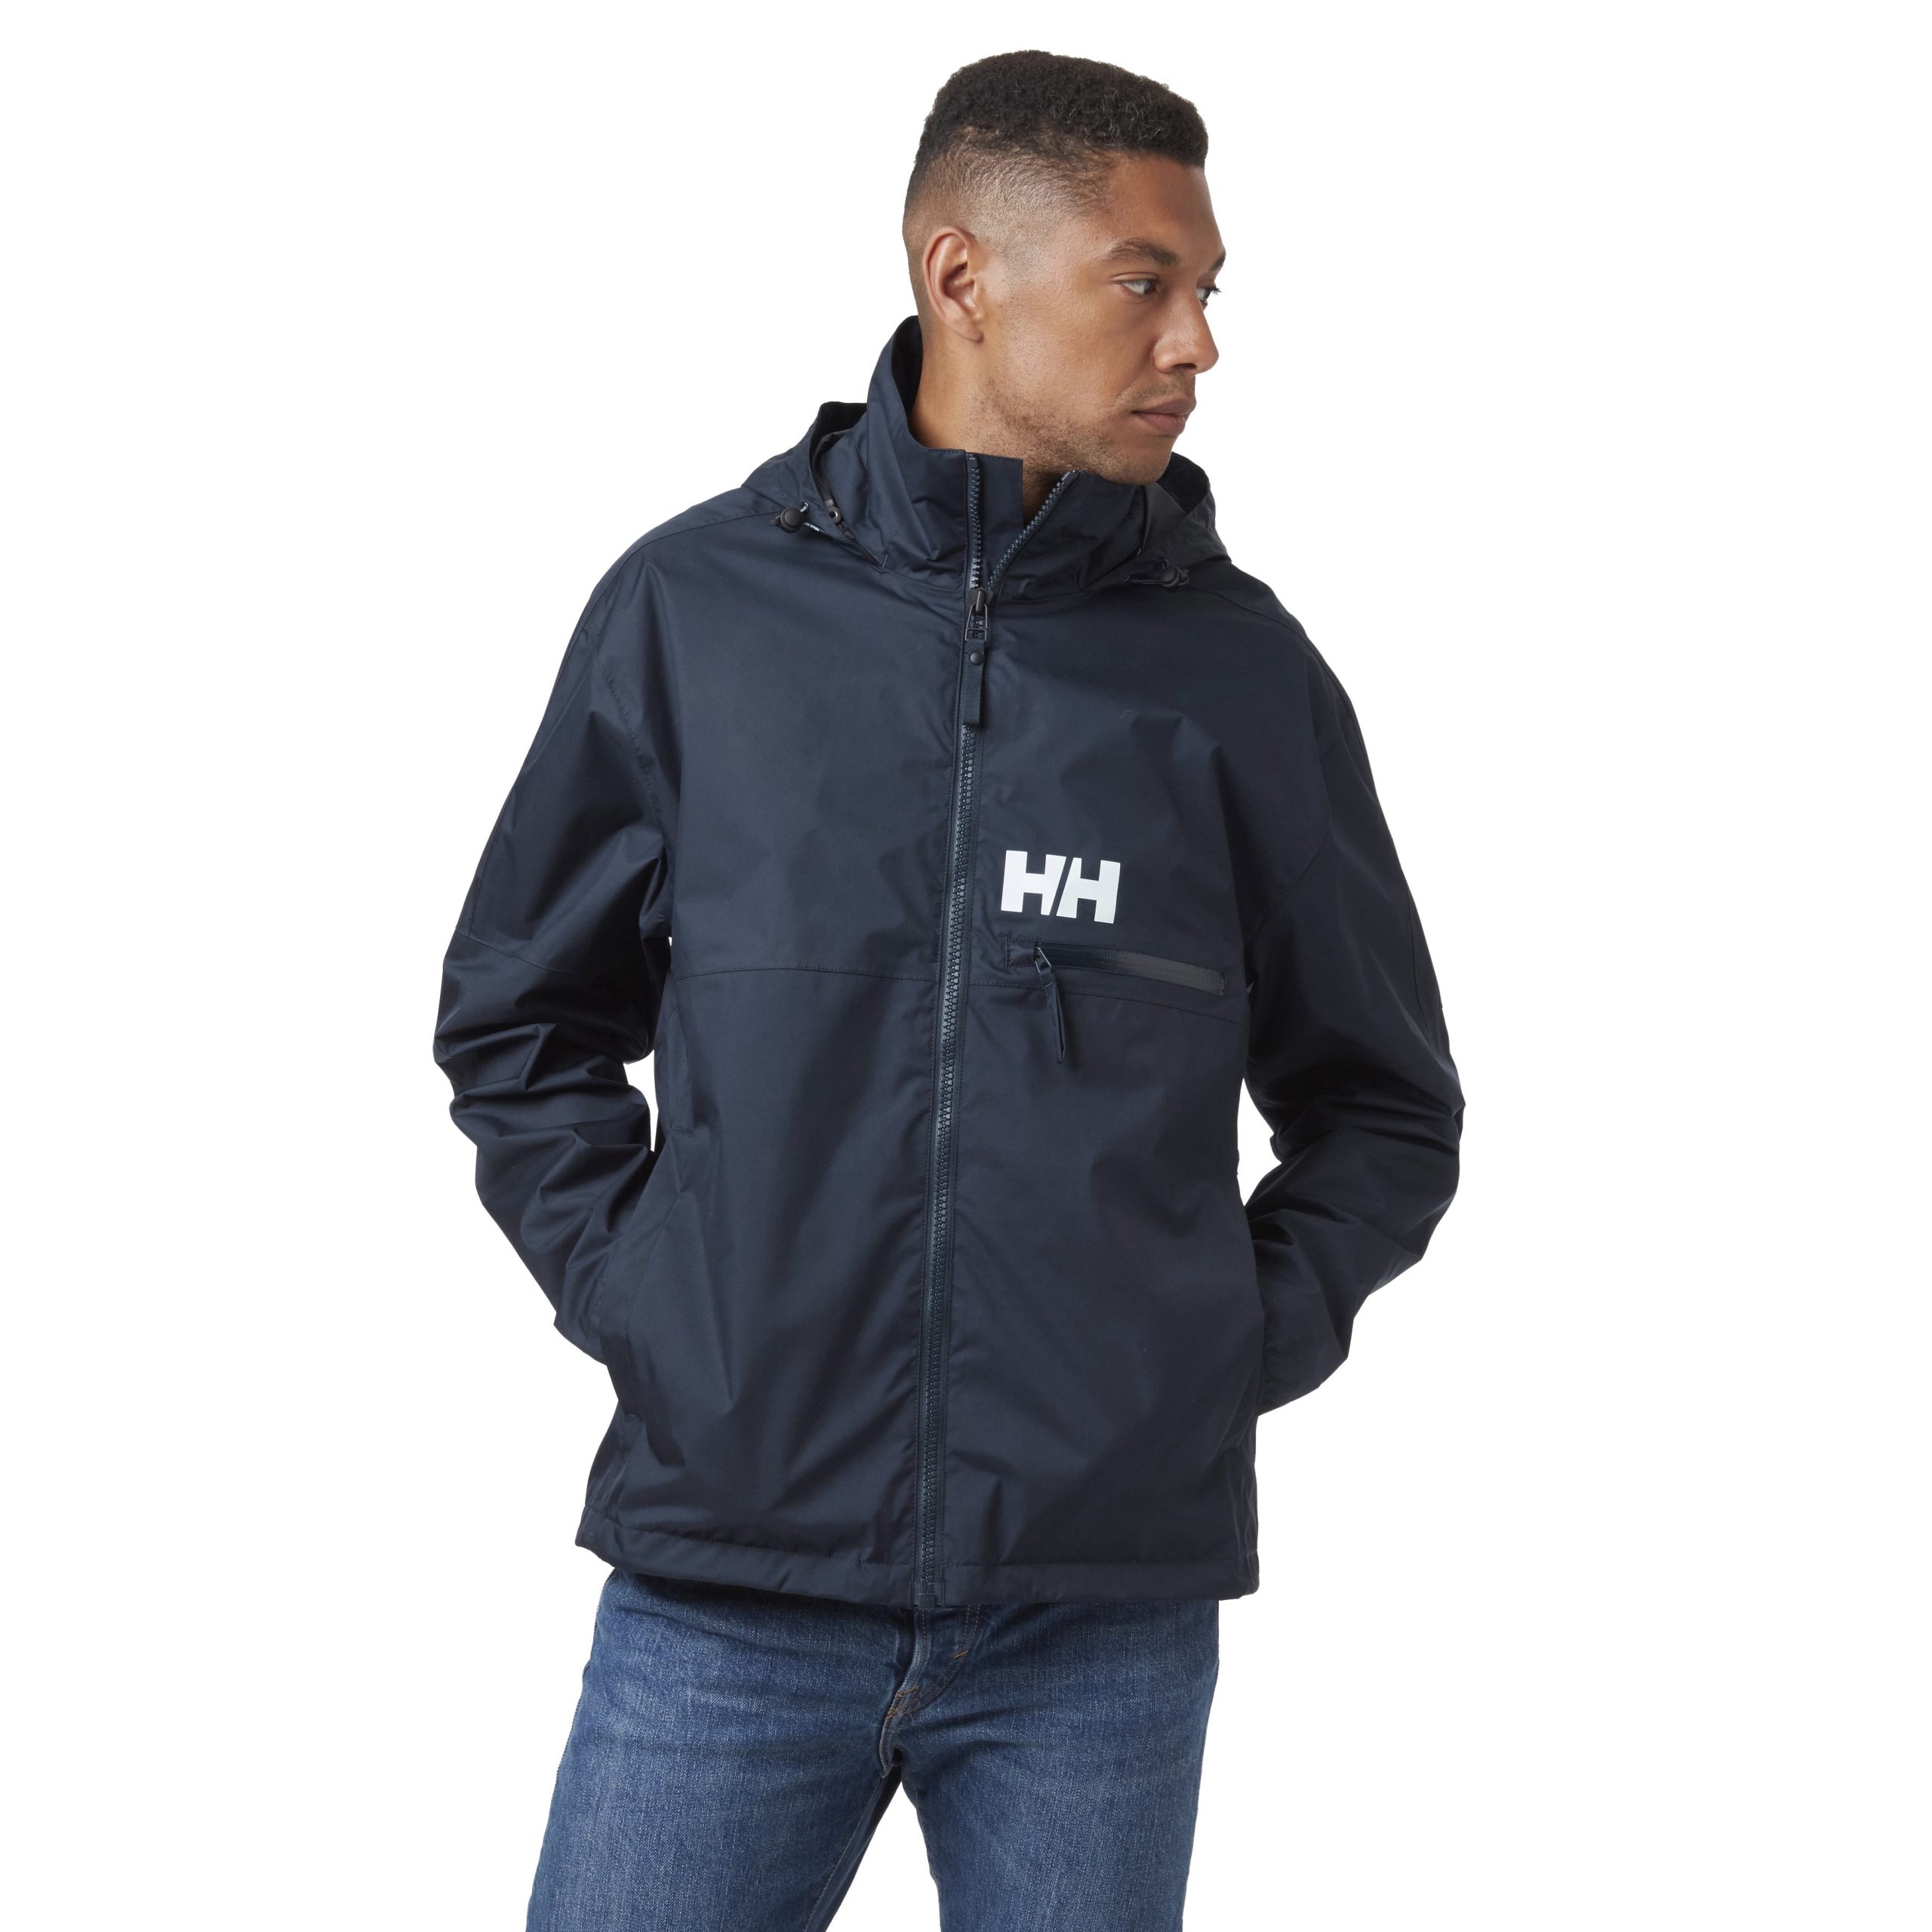 Helly Hansen Mens Active Stride Jacket Waterproof Breathable Urban Jacket, Big Weather Gear